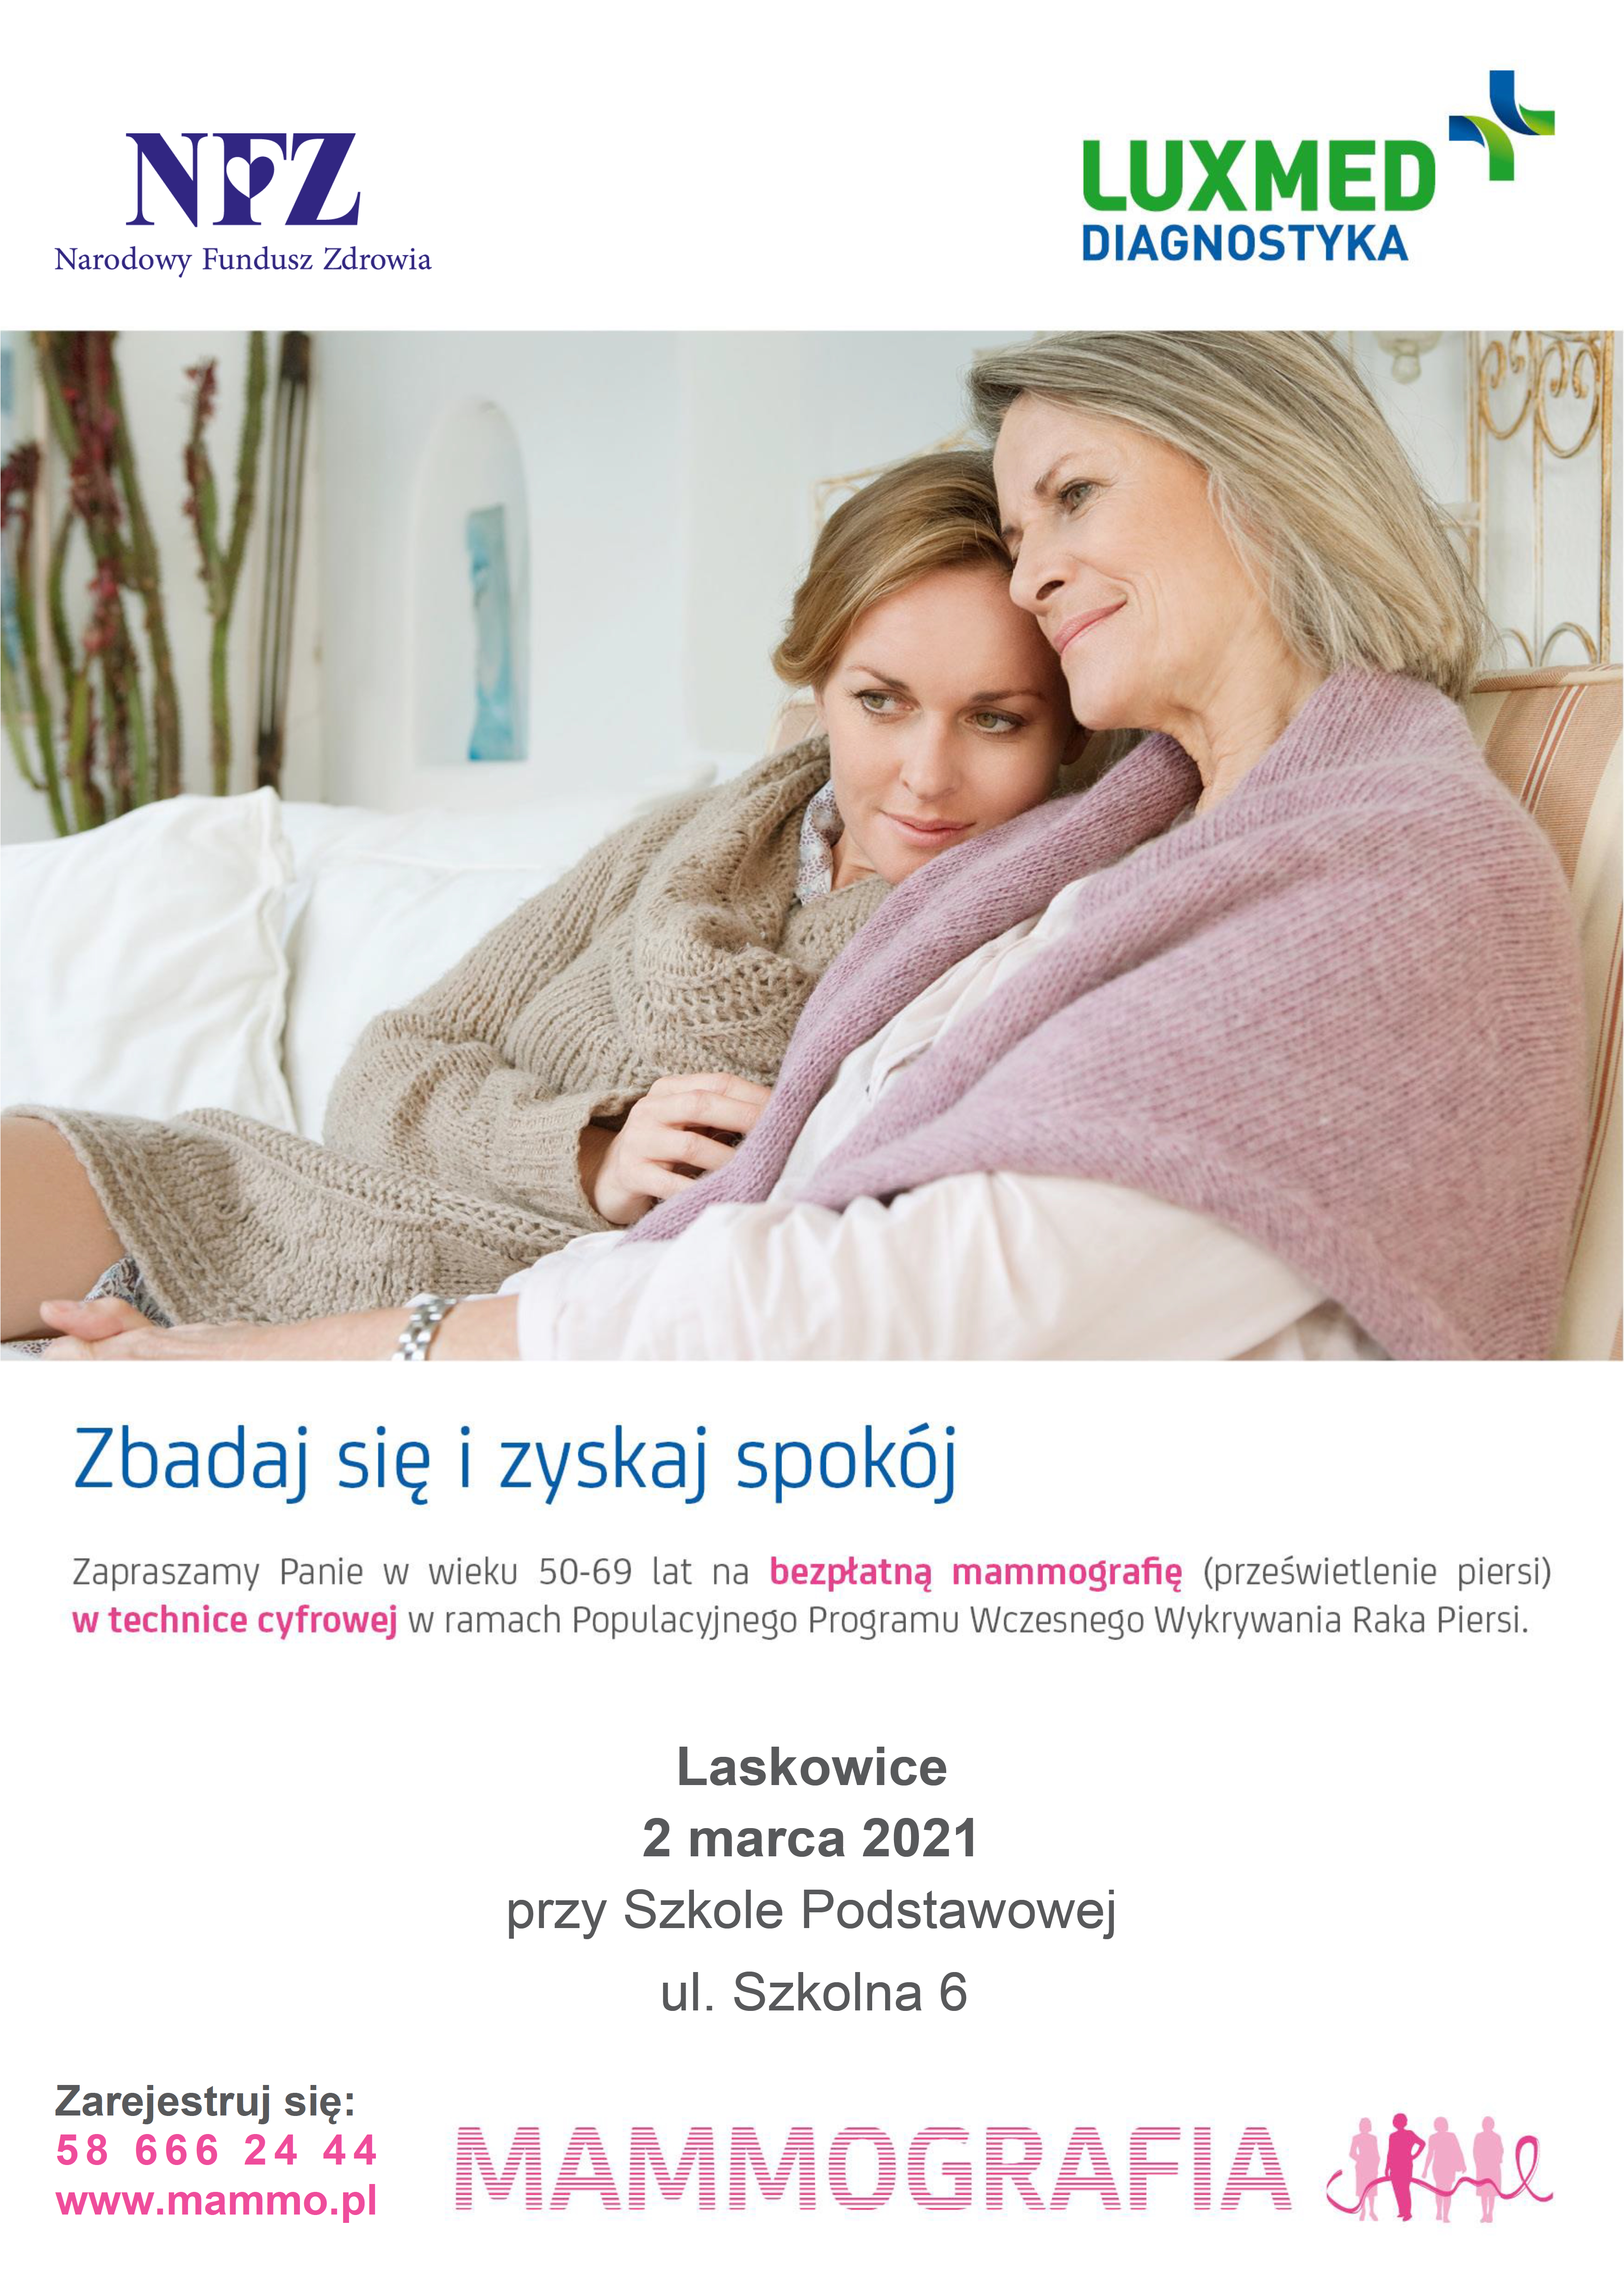 Mammografia Laskowice